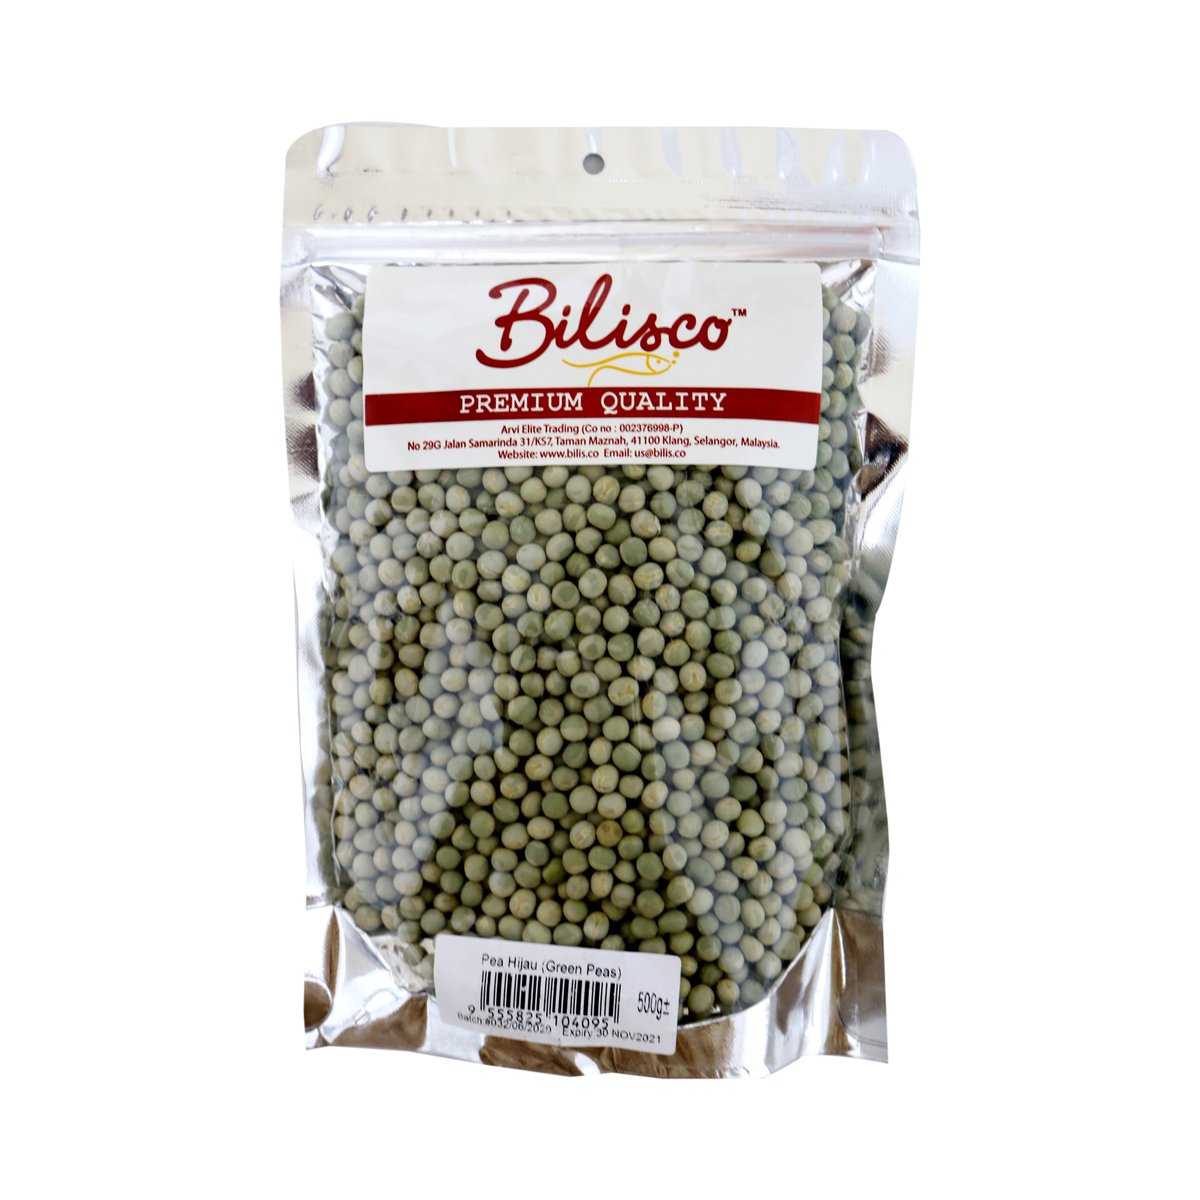 Bilisco Green Peas 500g